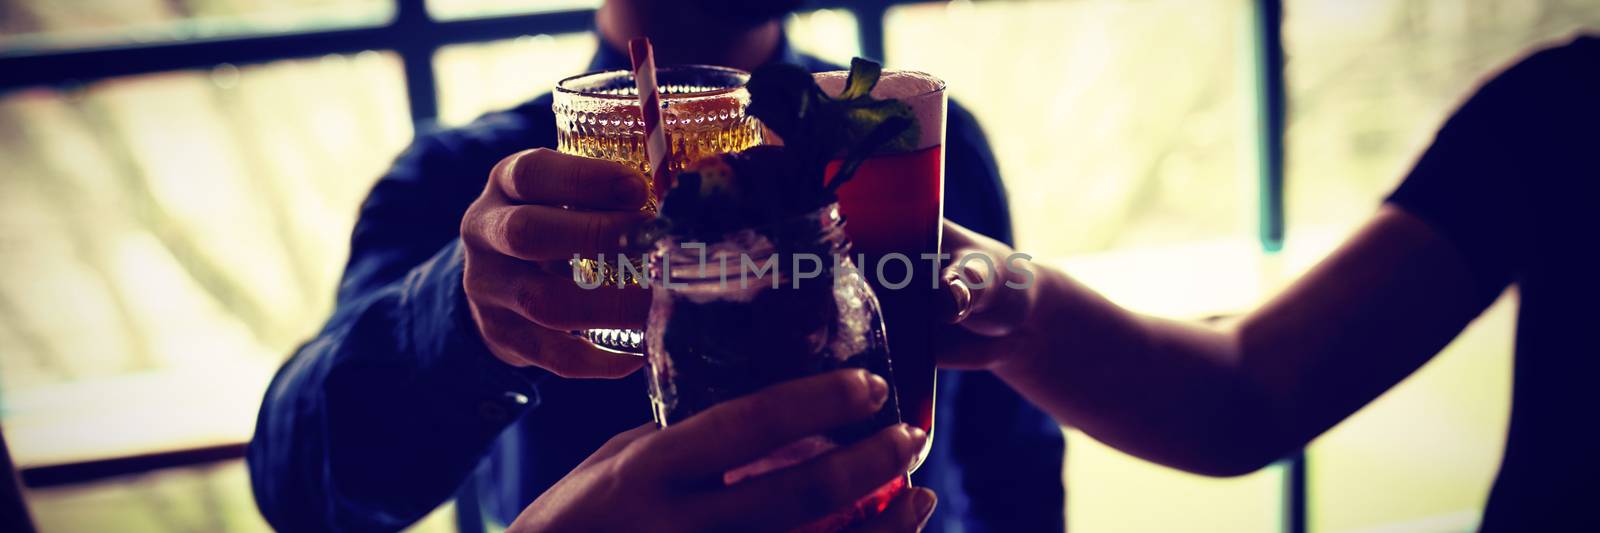 Friends toasting glasses of drinks in bar by Wavebreakmedia